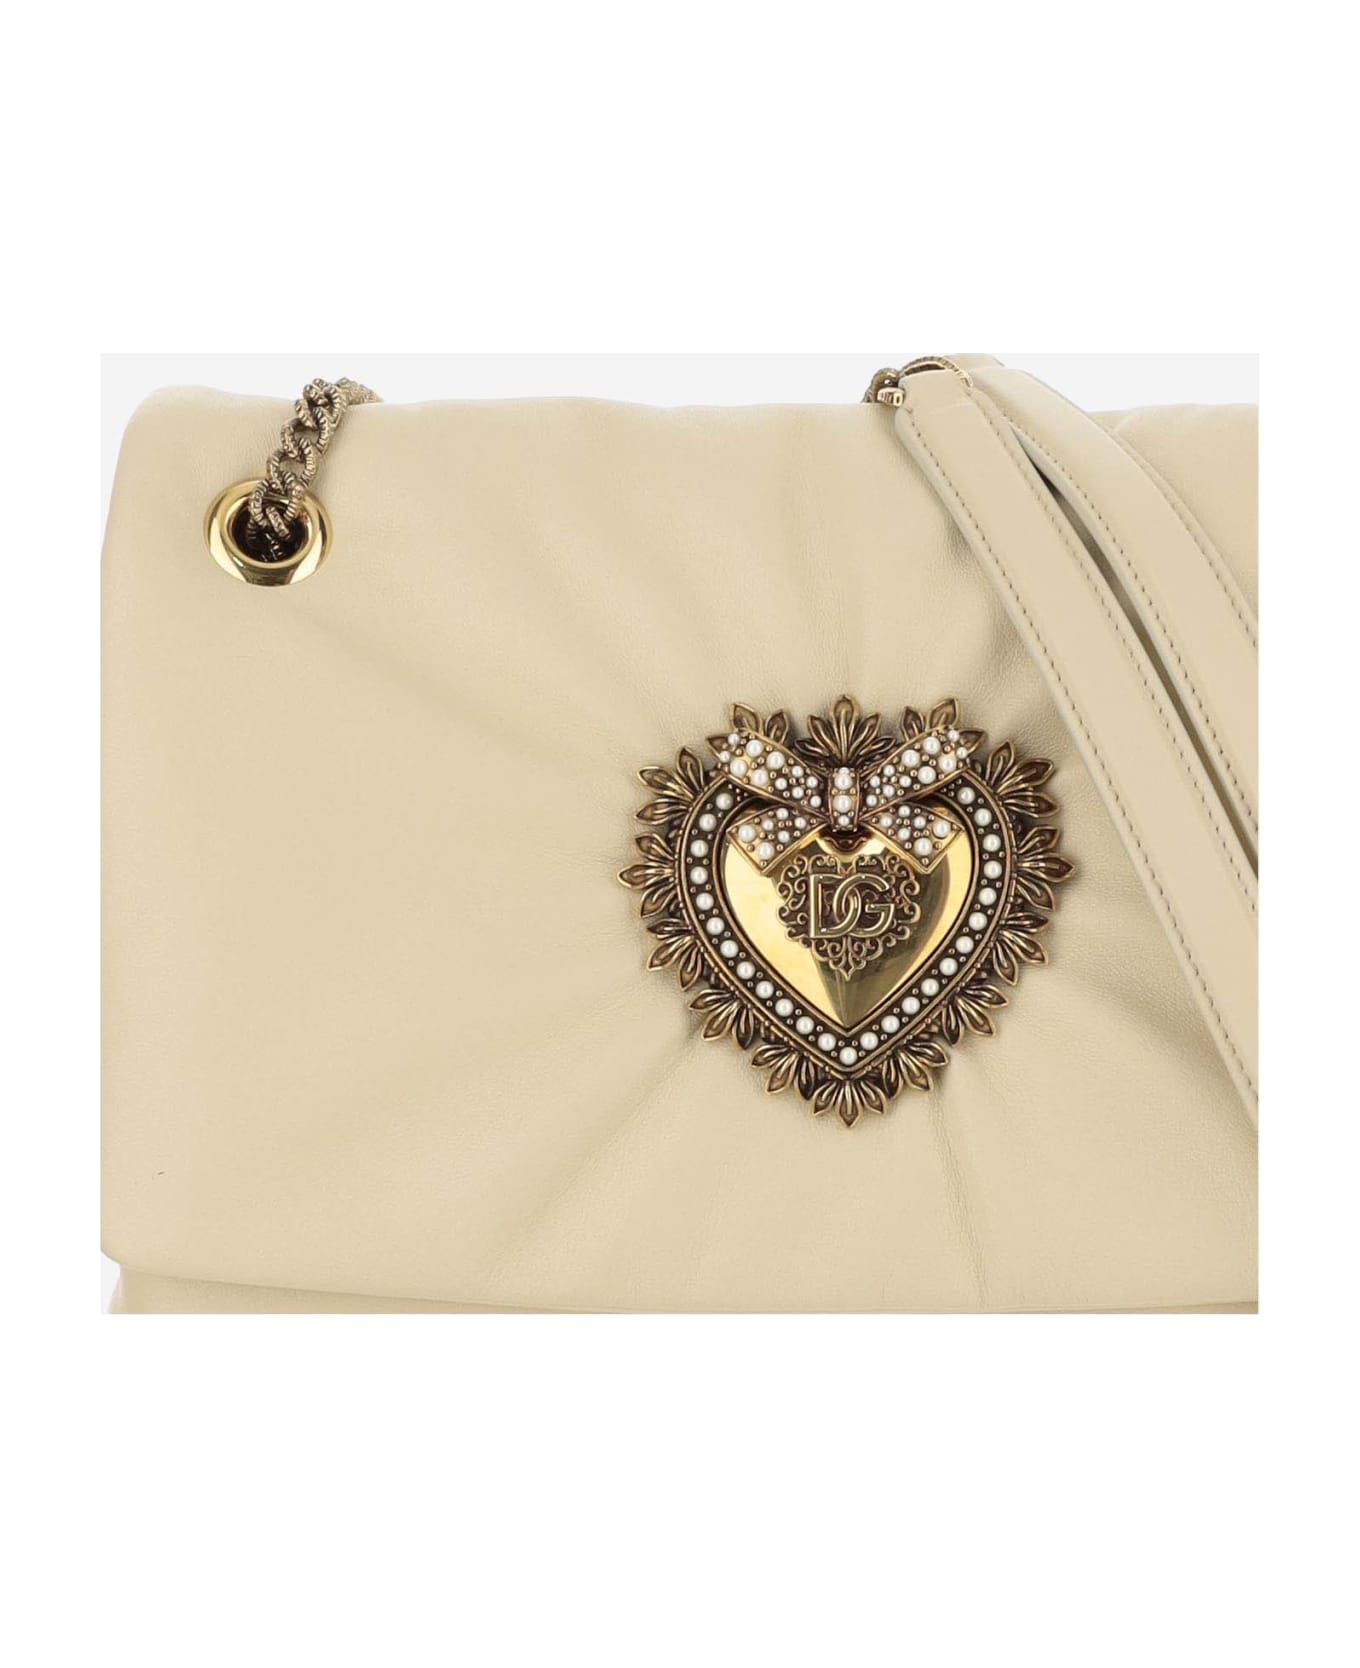 Dolce & Gabbana Devotion Soft Medium Shoulder Bag - Burro